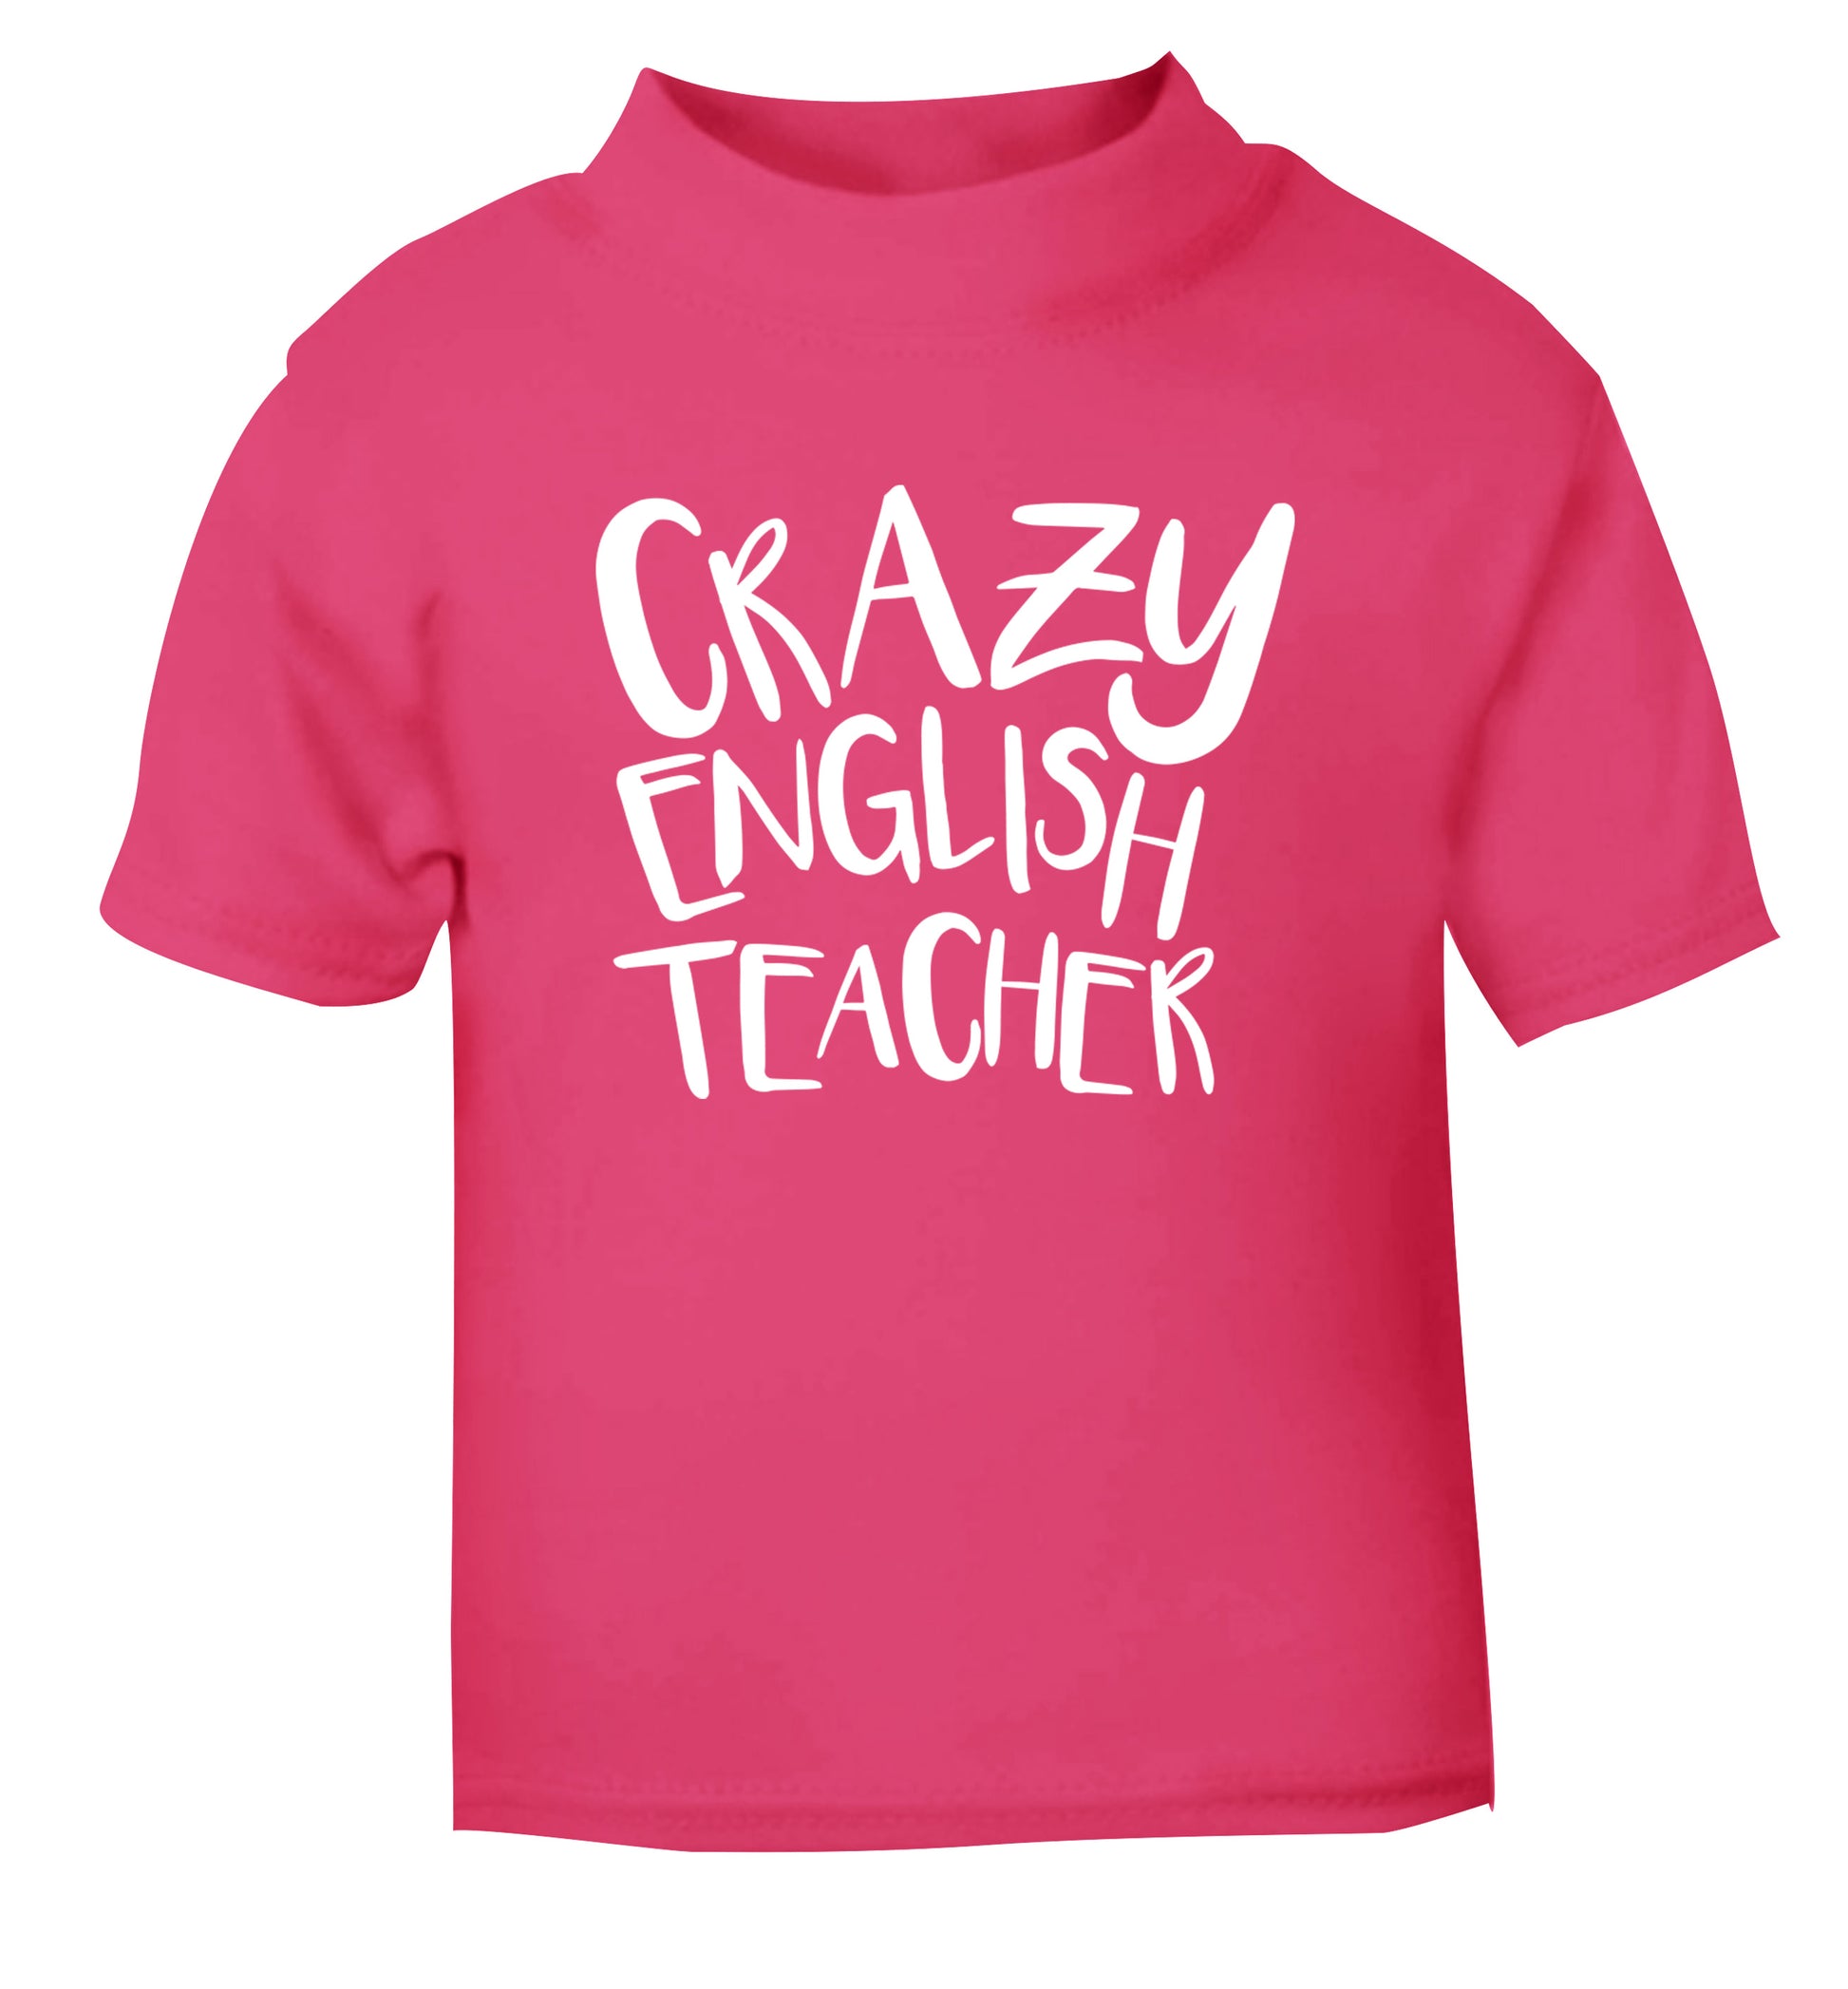 Crazy English Teacher pink Baby Toddler Tshirt 2 Years